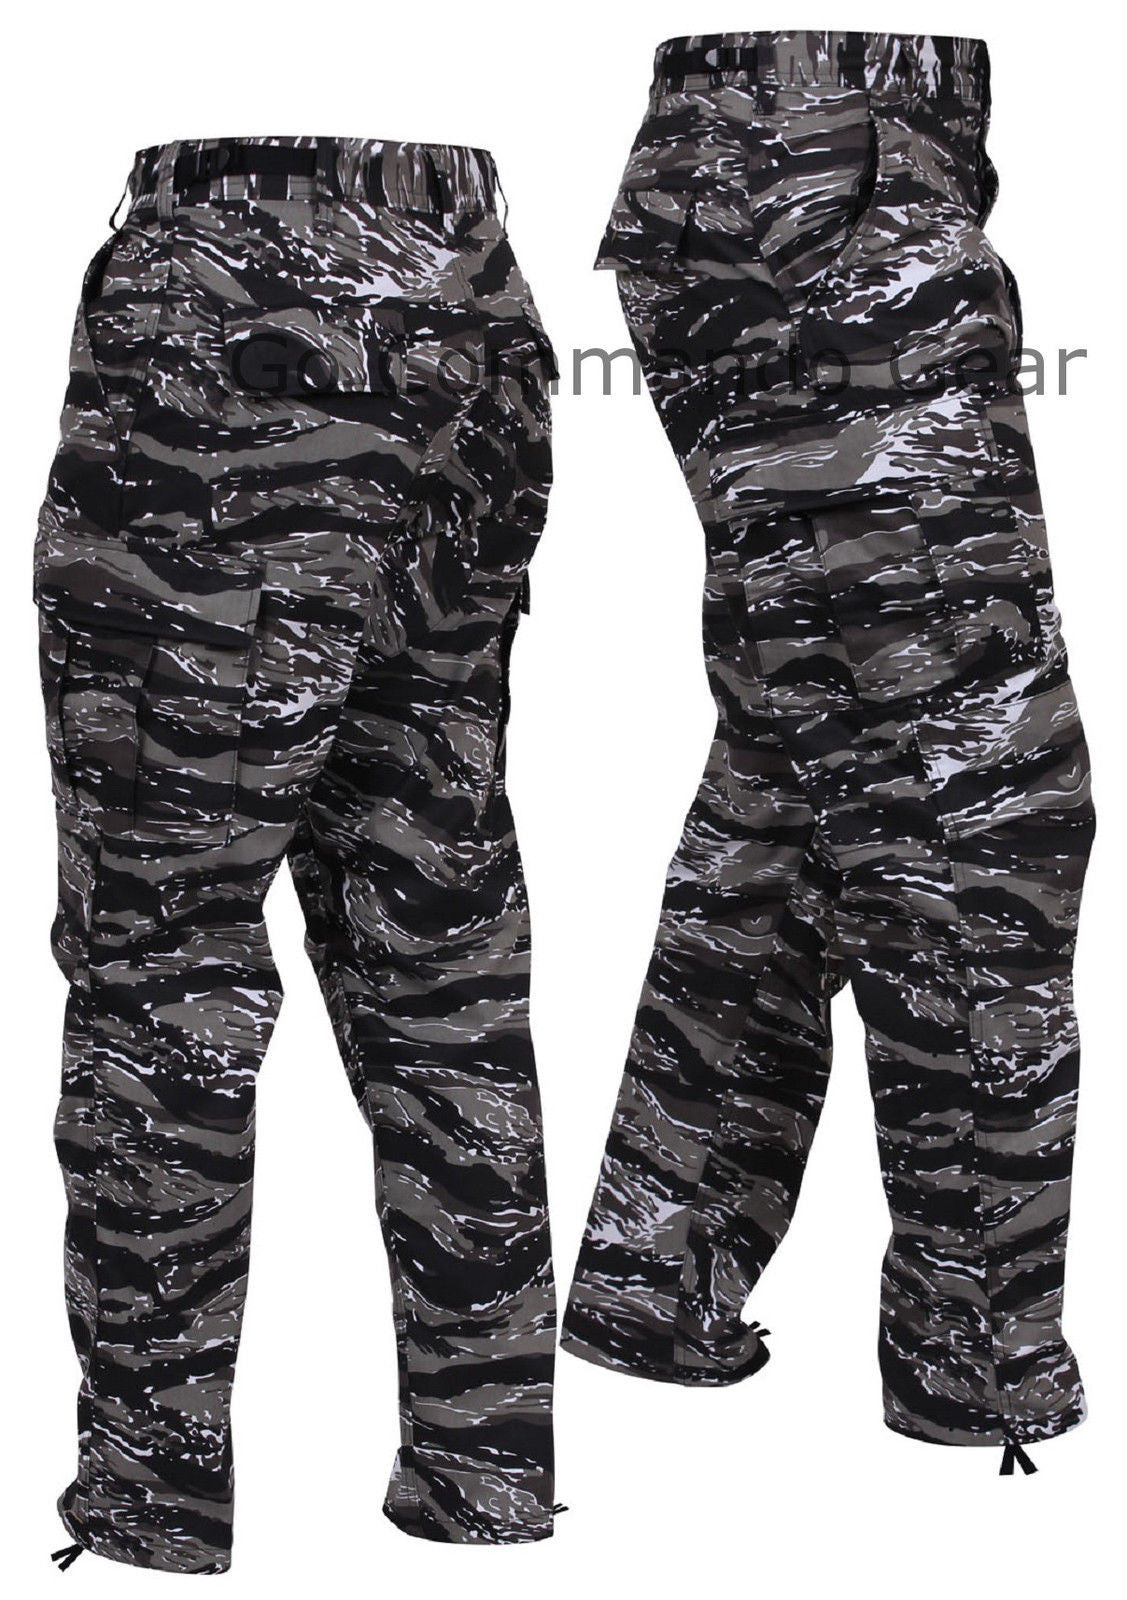 Men's Urban Tiger Stripe Camo BDU Pants - Tactical Uniform Style Pants